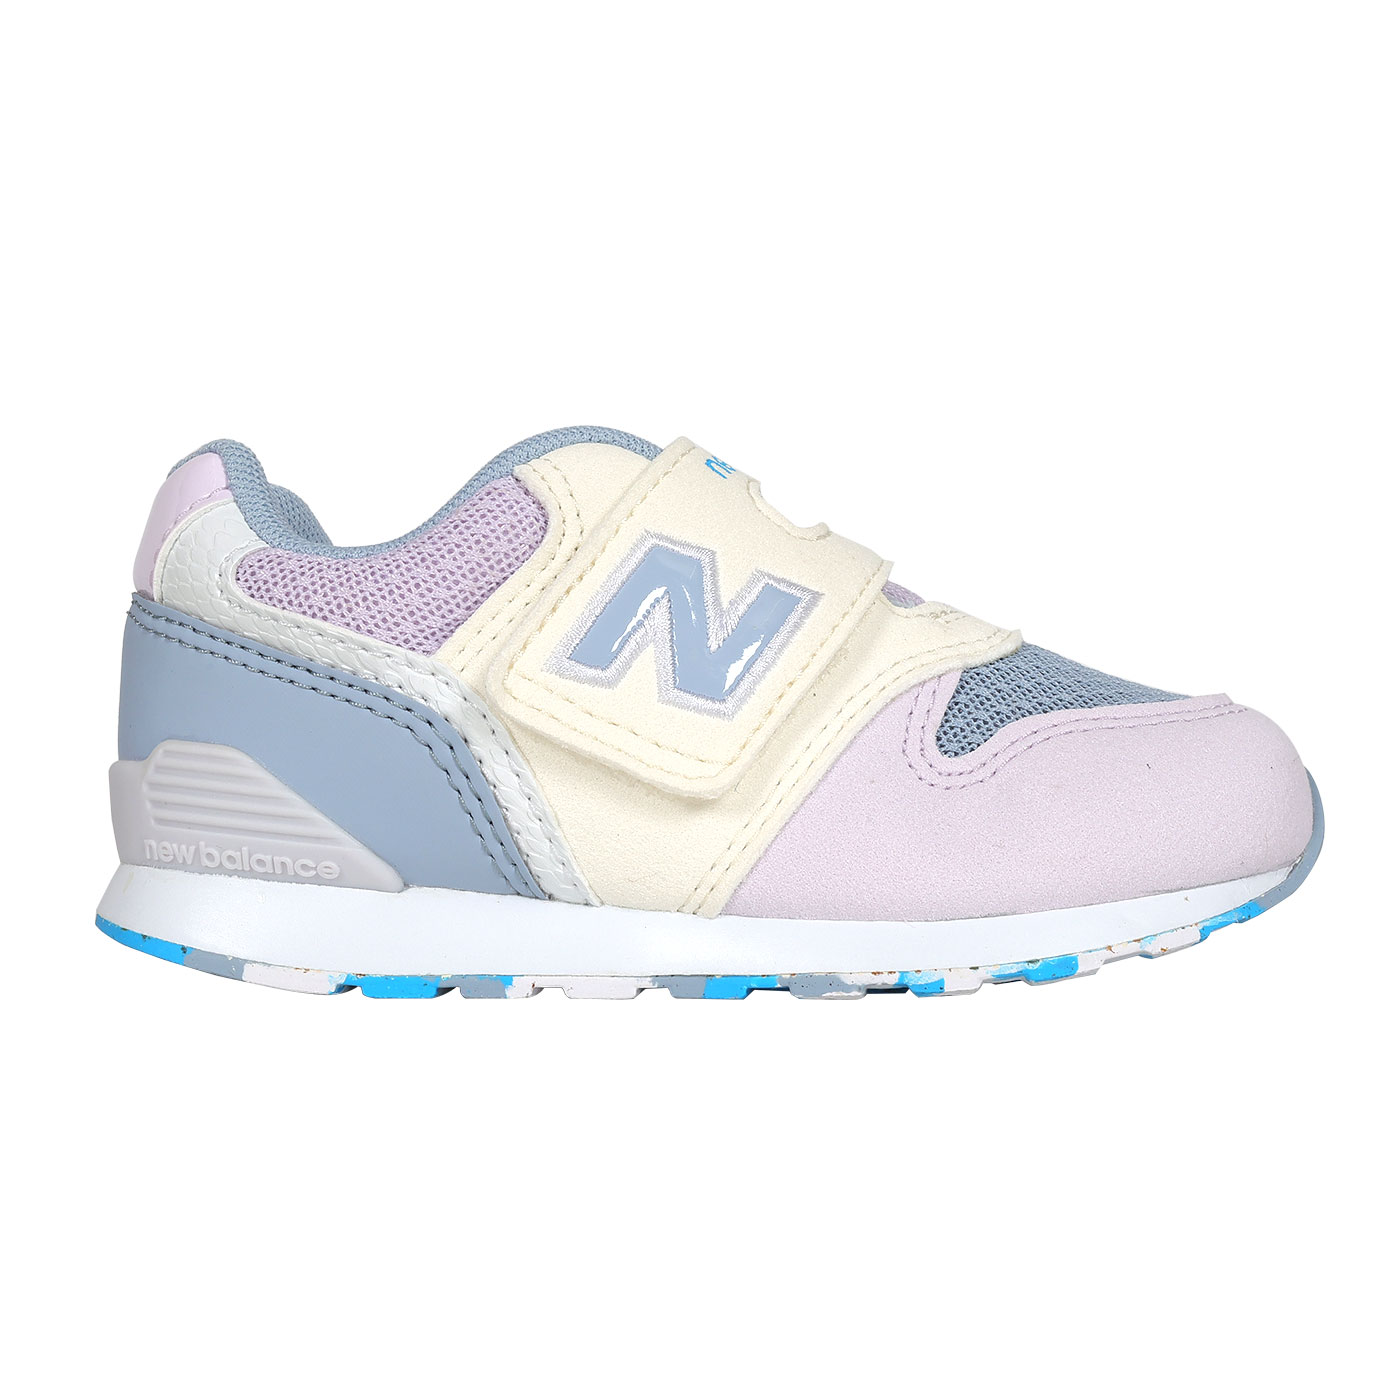 NEW BALANCE 小童復古慢跑鞋-WIDE  IZ996MH3 - 粉紫霧藍白